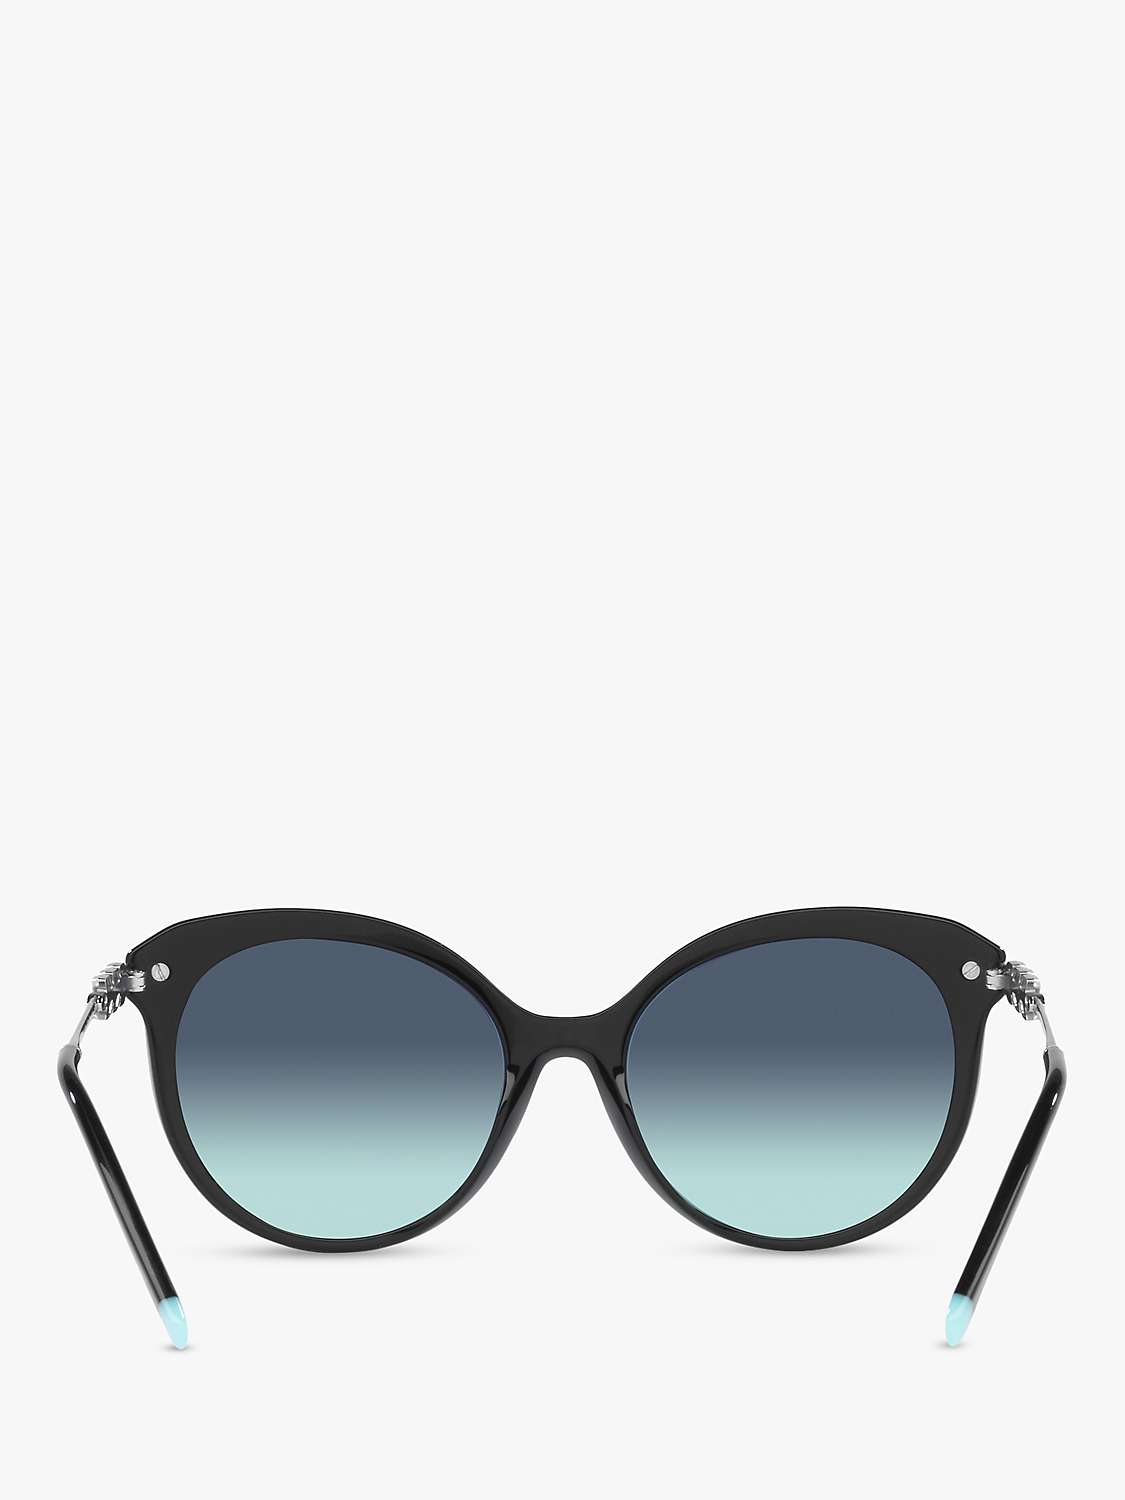 Buy Tiffany & Co TF4189B Women's Cat's Eye Sunglasses Online at johnlewis.com